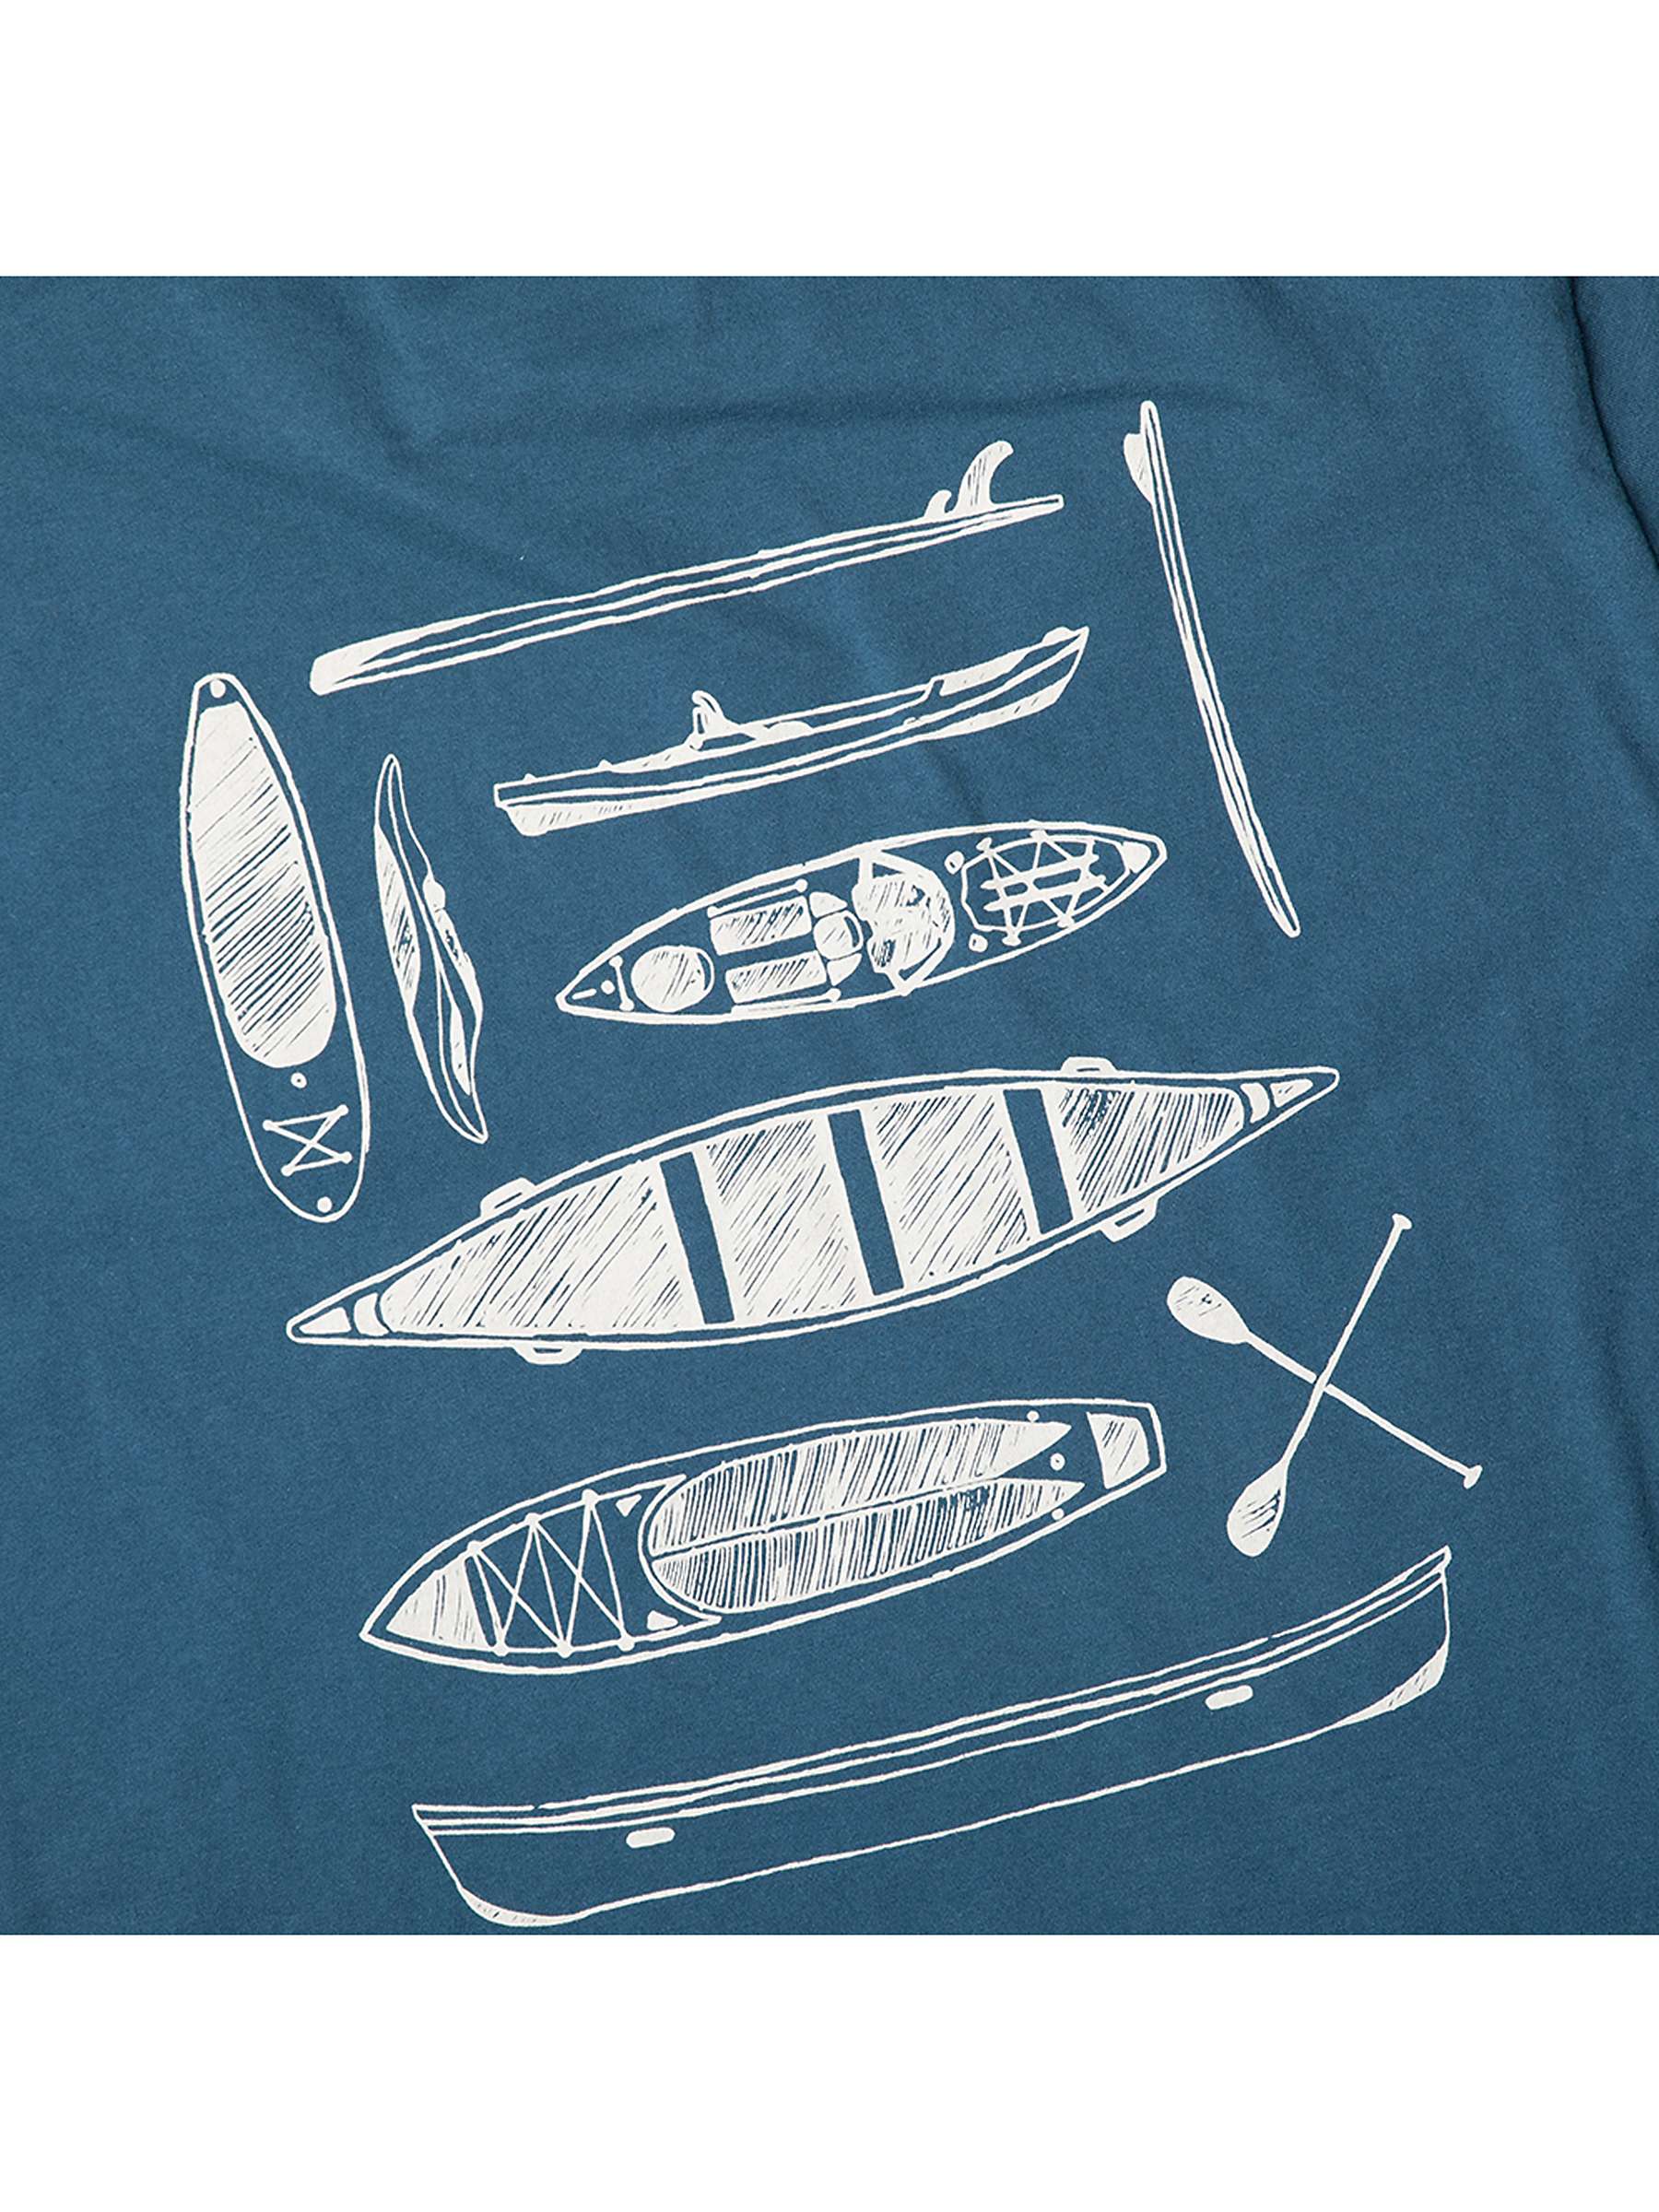 Buy KAVU Paddle Out Organic Cotton T-Shirt, Blue Online at johnlewis.com